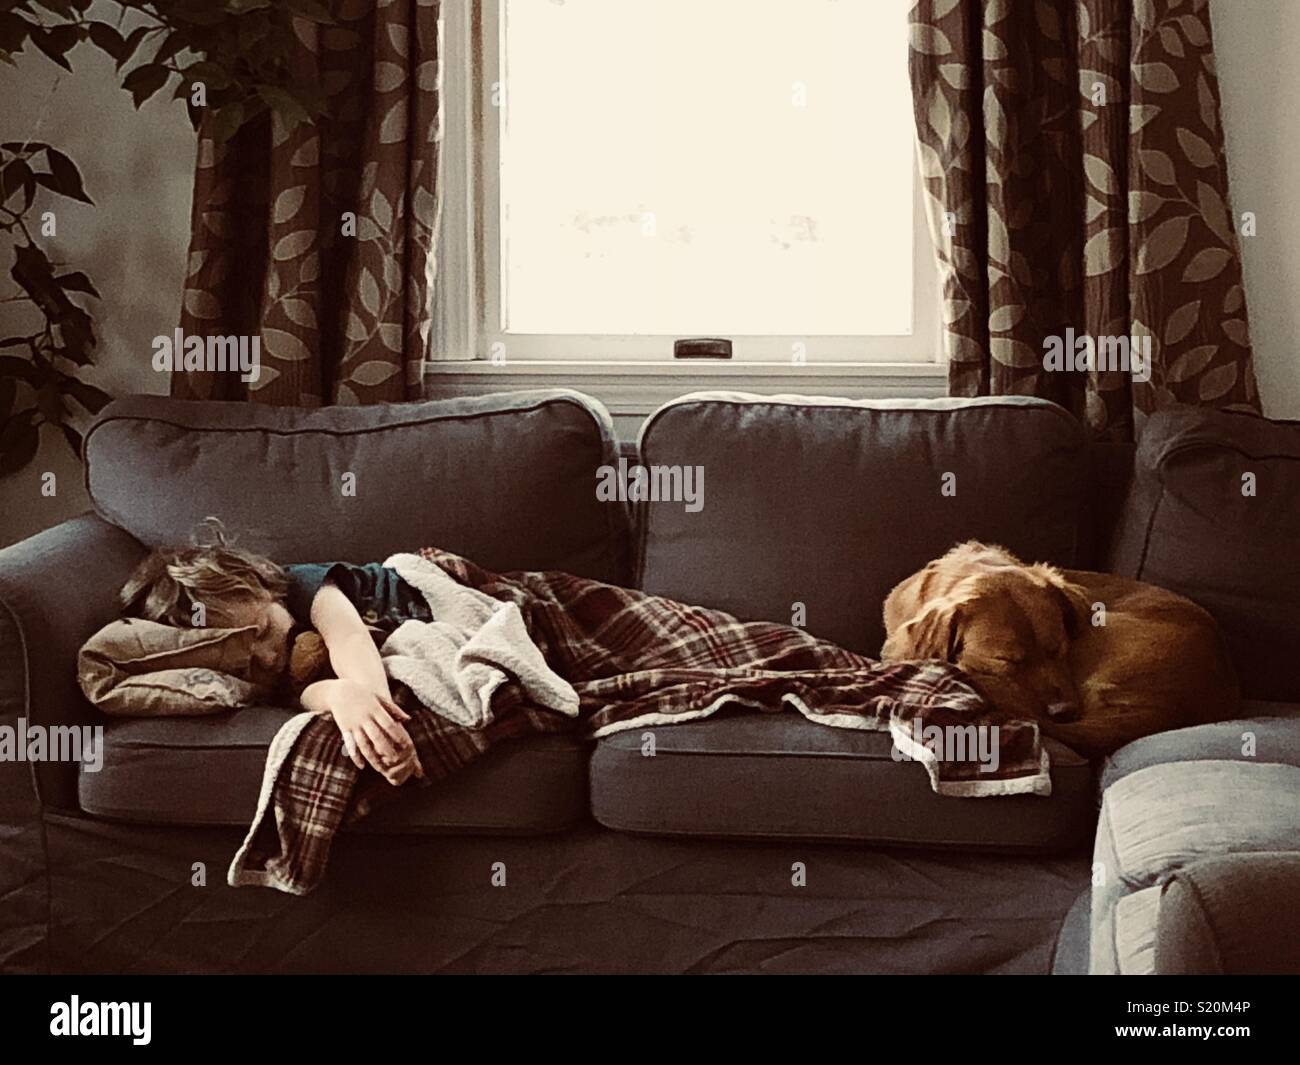 Boy& his dog napping Stock Photo